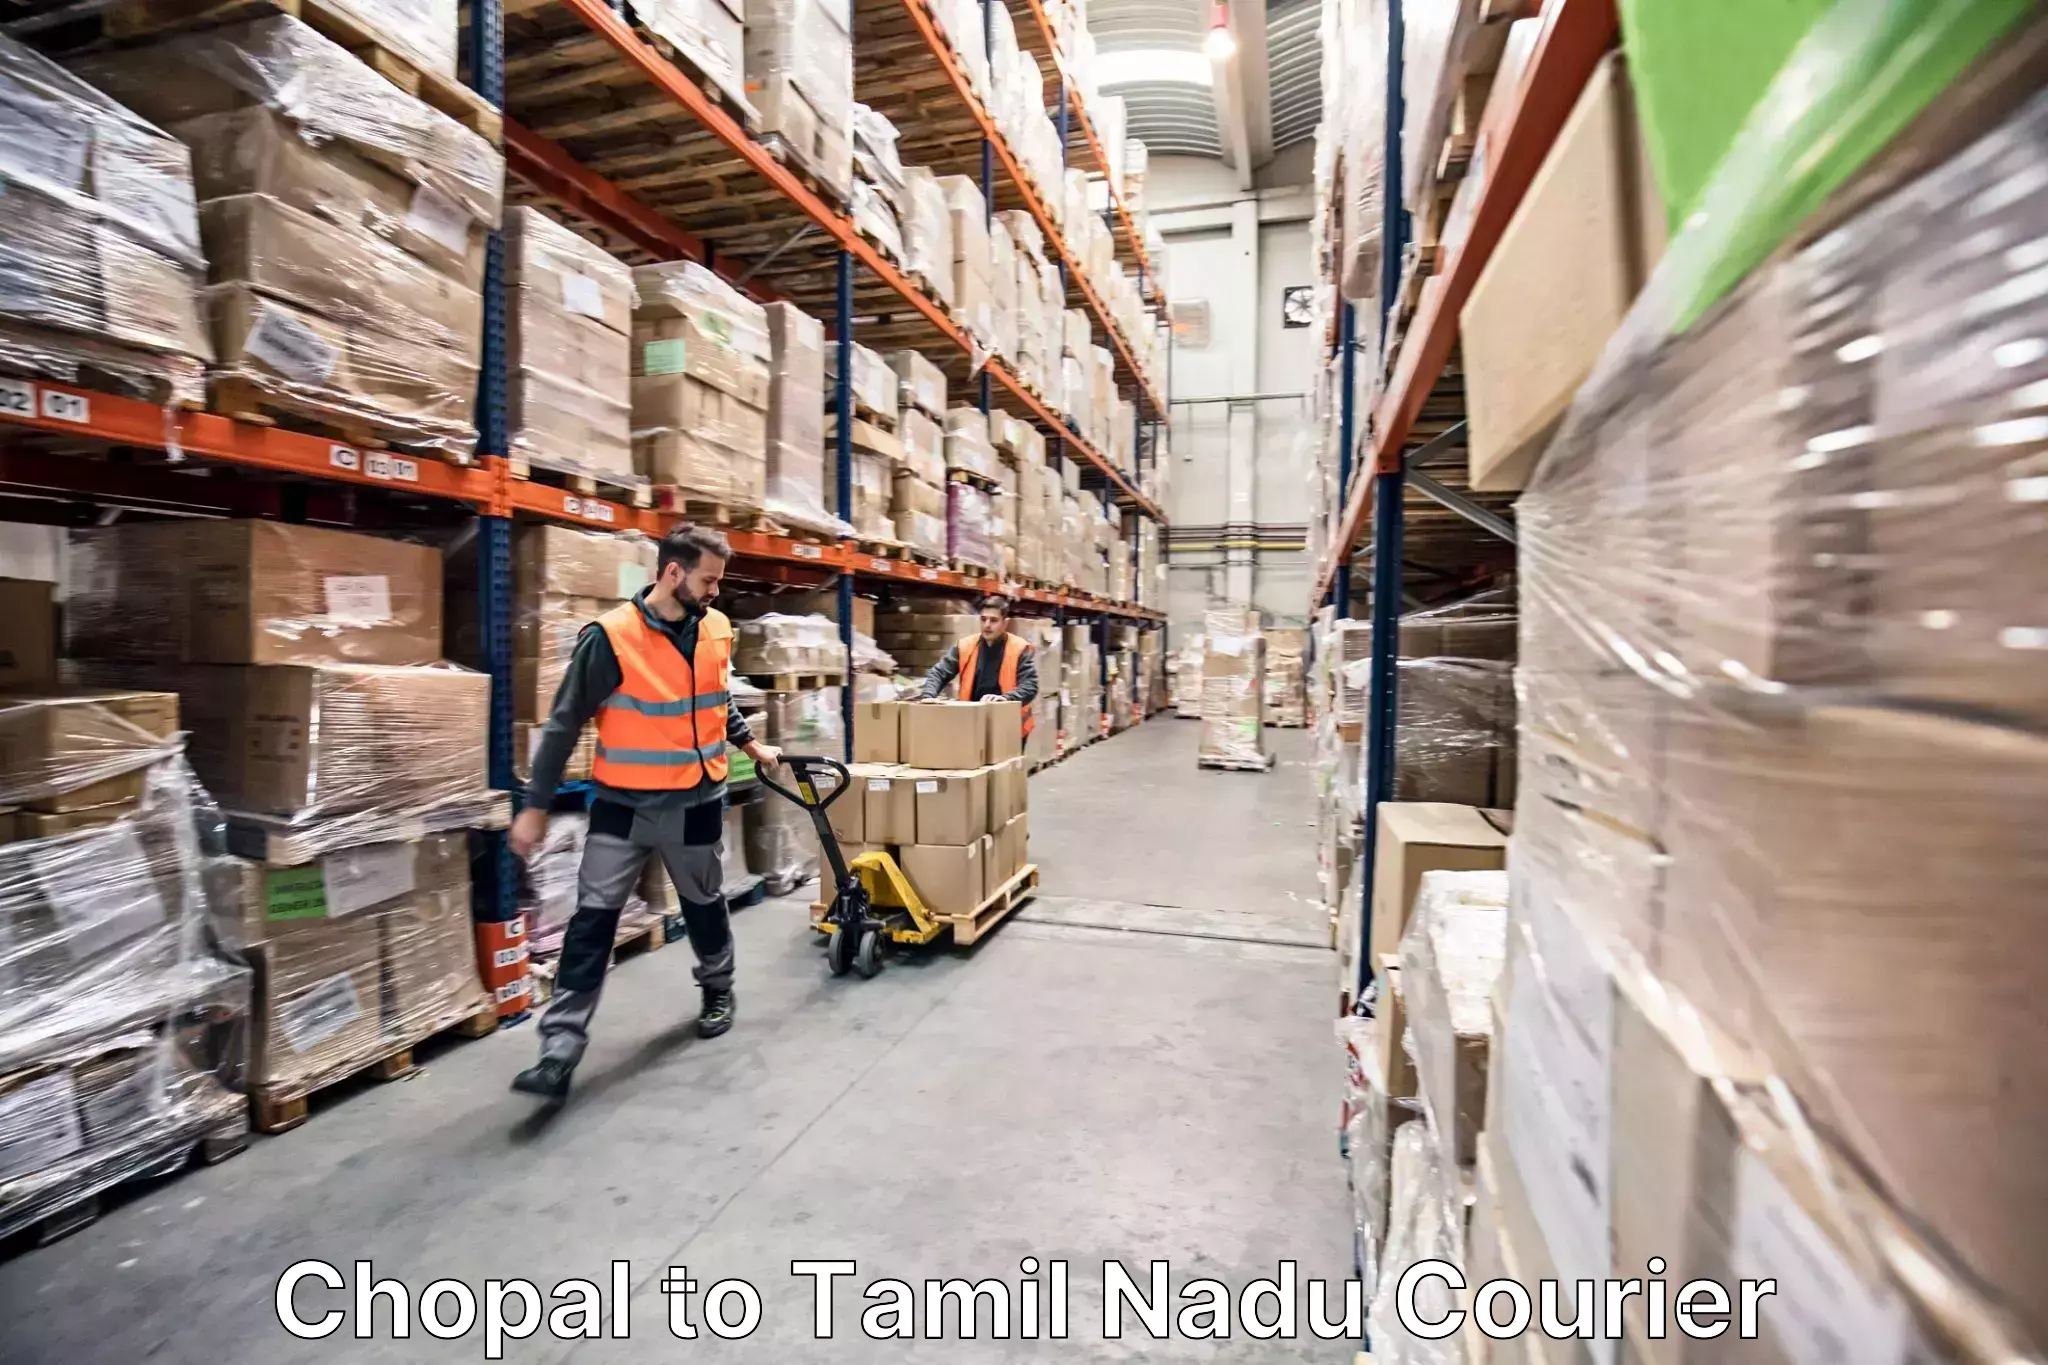 Quality moving company Chopal to Periyakulam